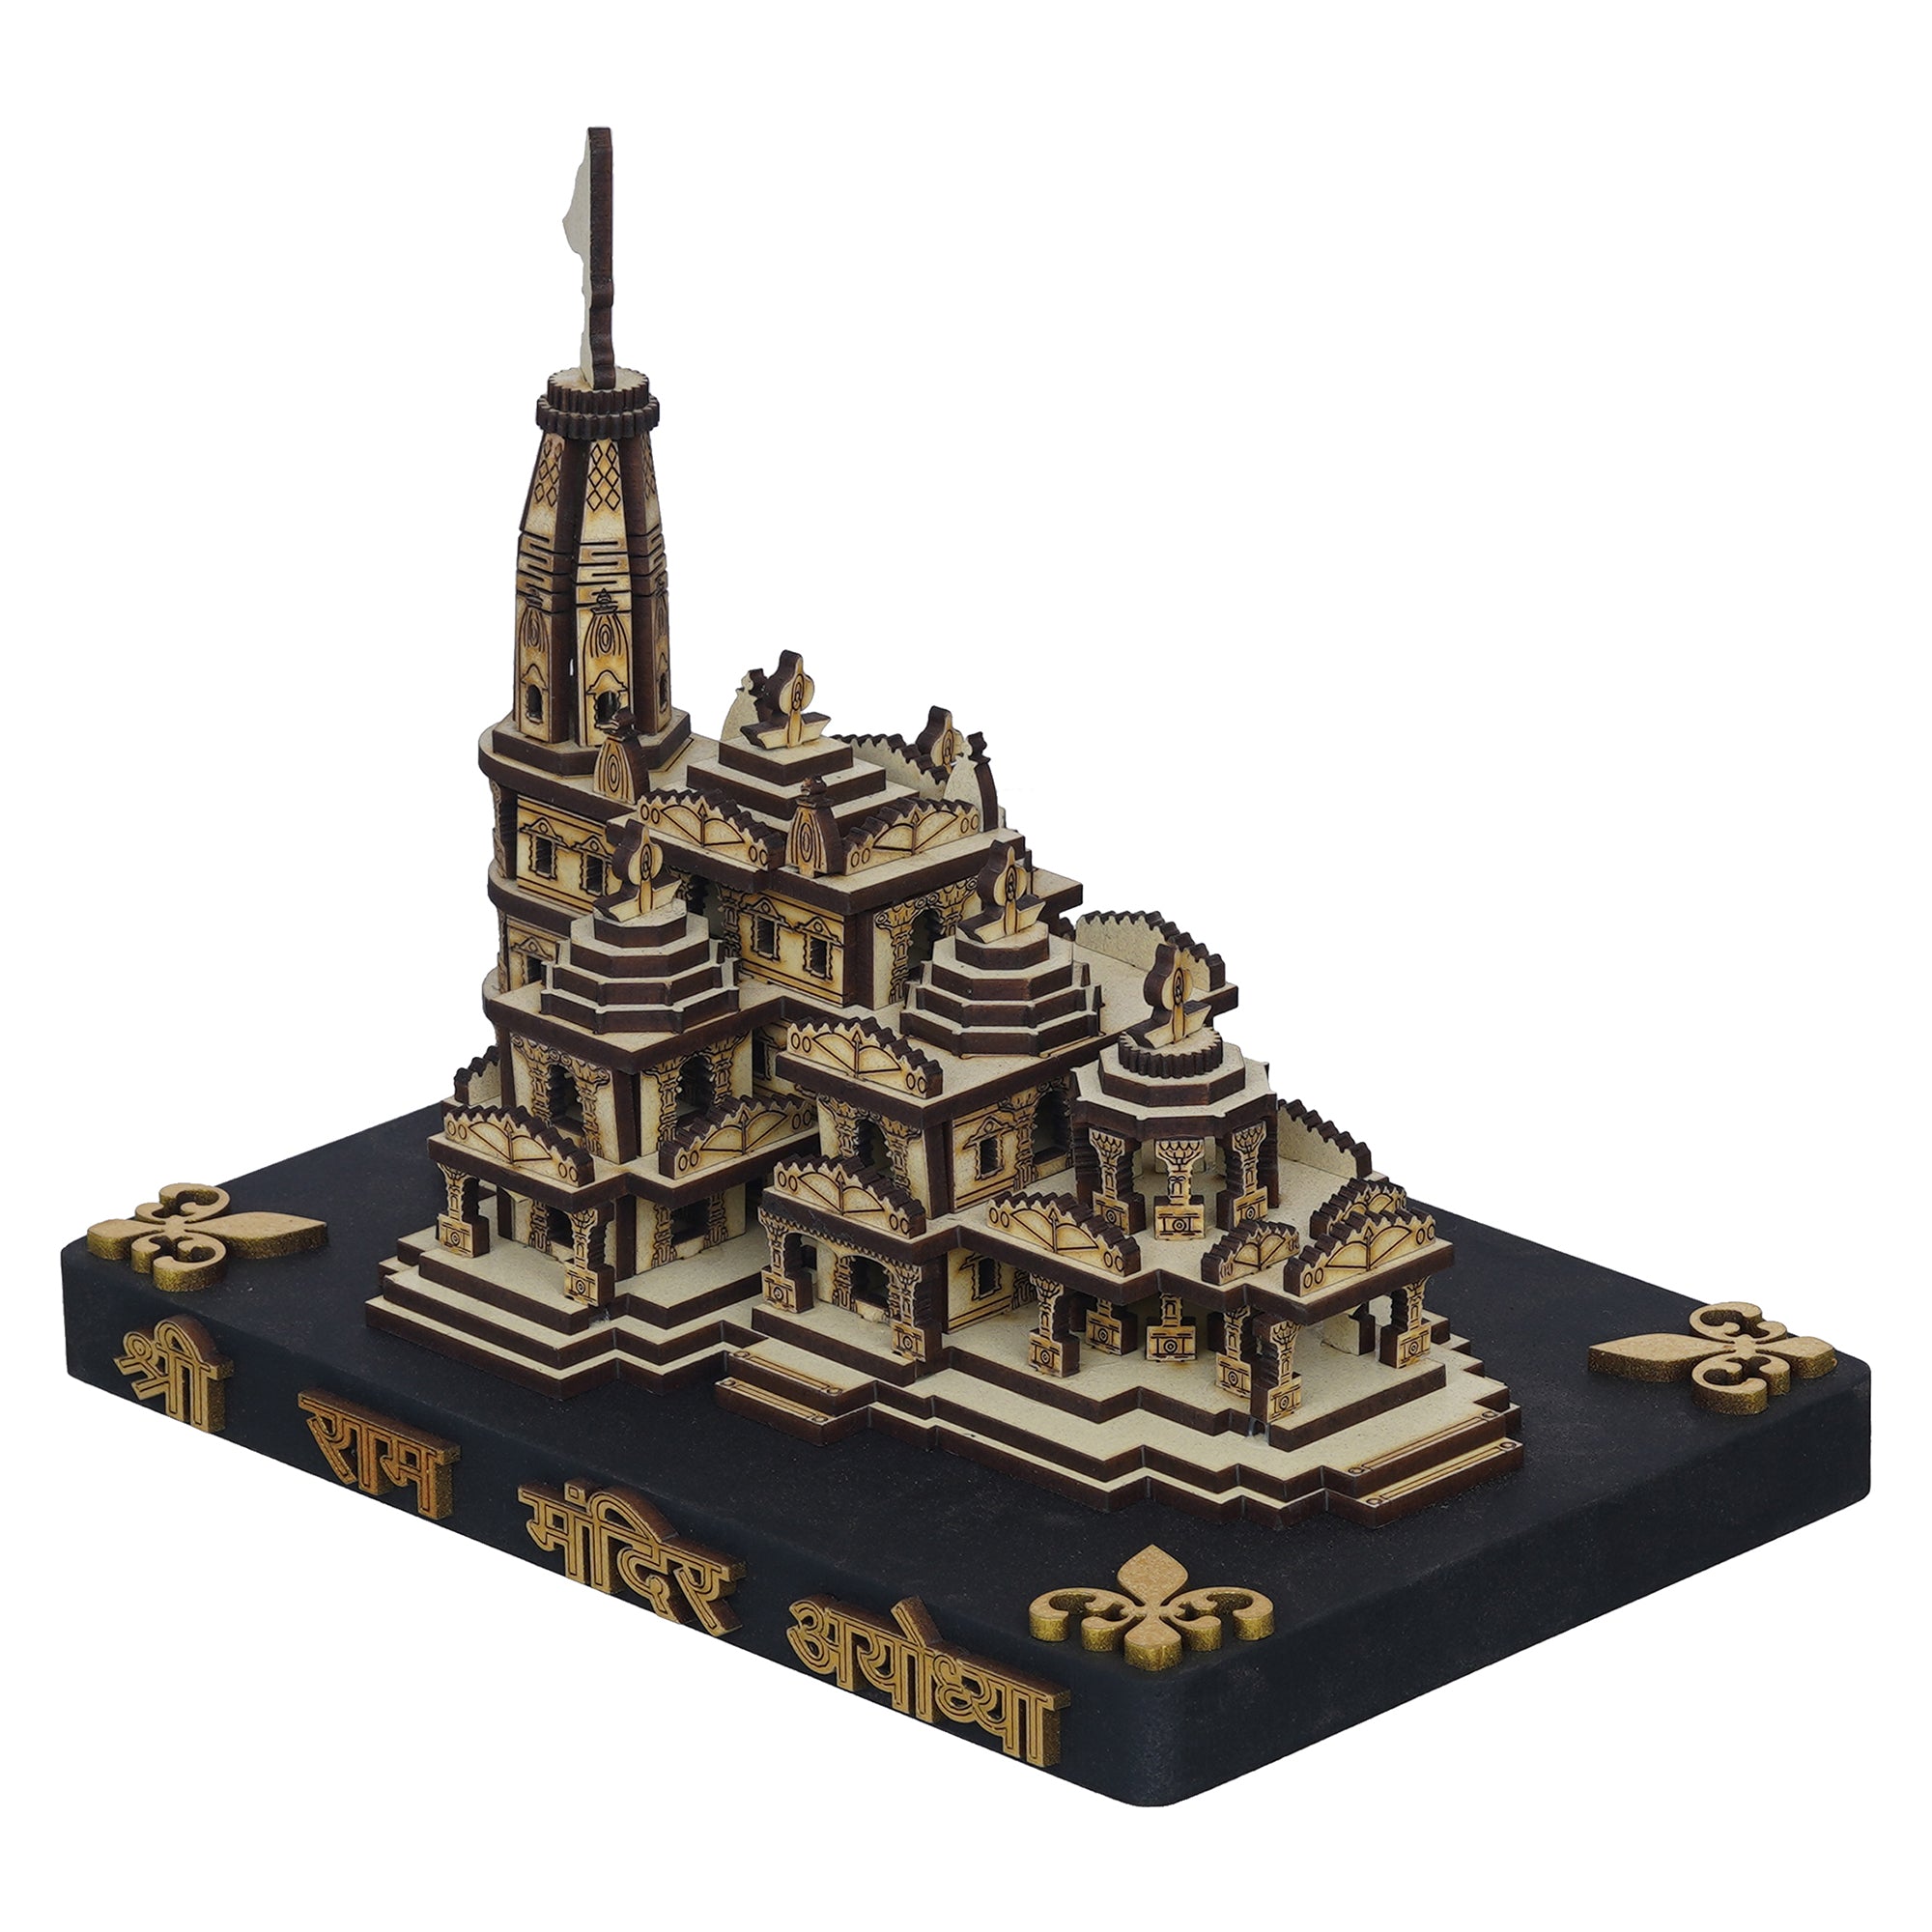 eCraftIndia Shri Ram Mandir Ayodhya Model - Wooden MDF Craftsmanship Authentic Designer Temple - Ideal for Home Temple, Decor, and Spiritual Gifting (Beige, Gold) 2